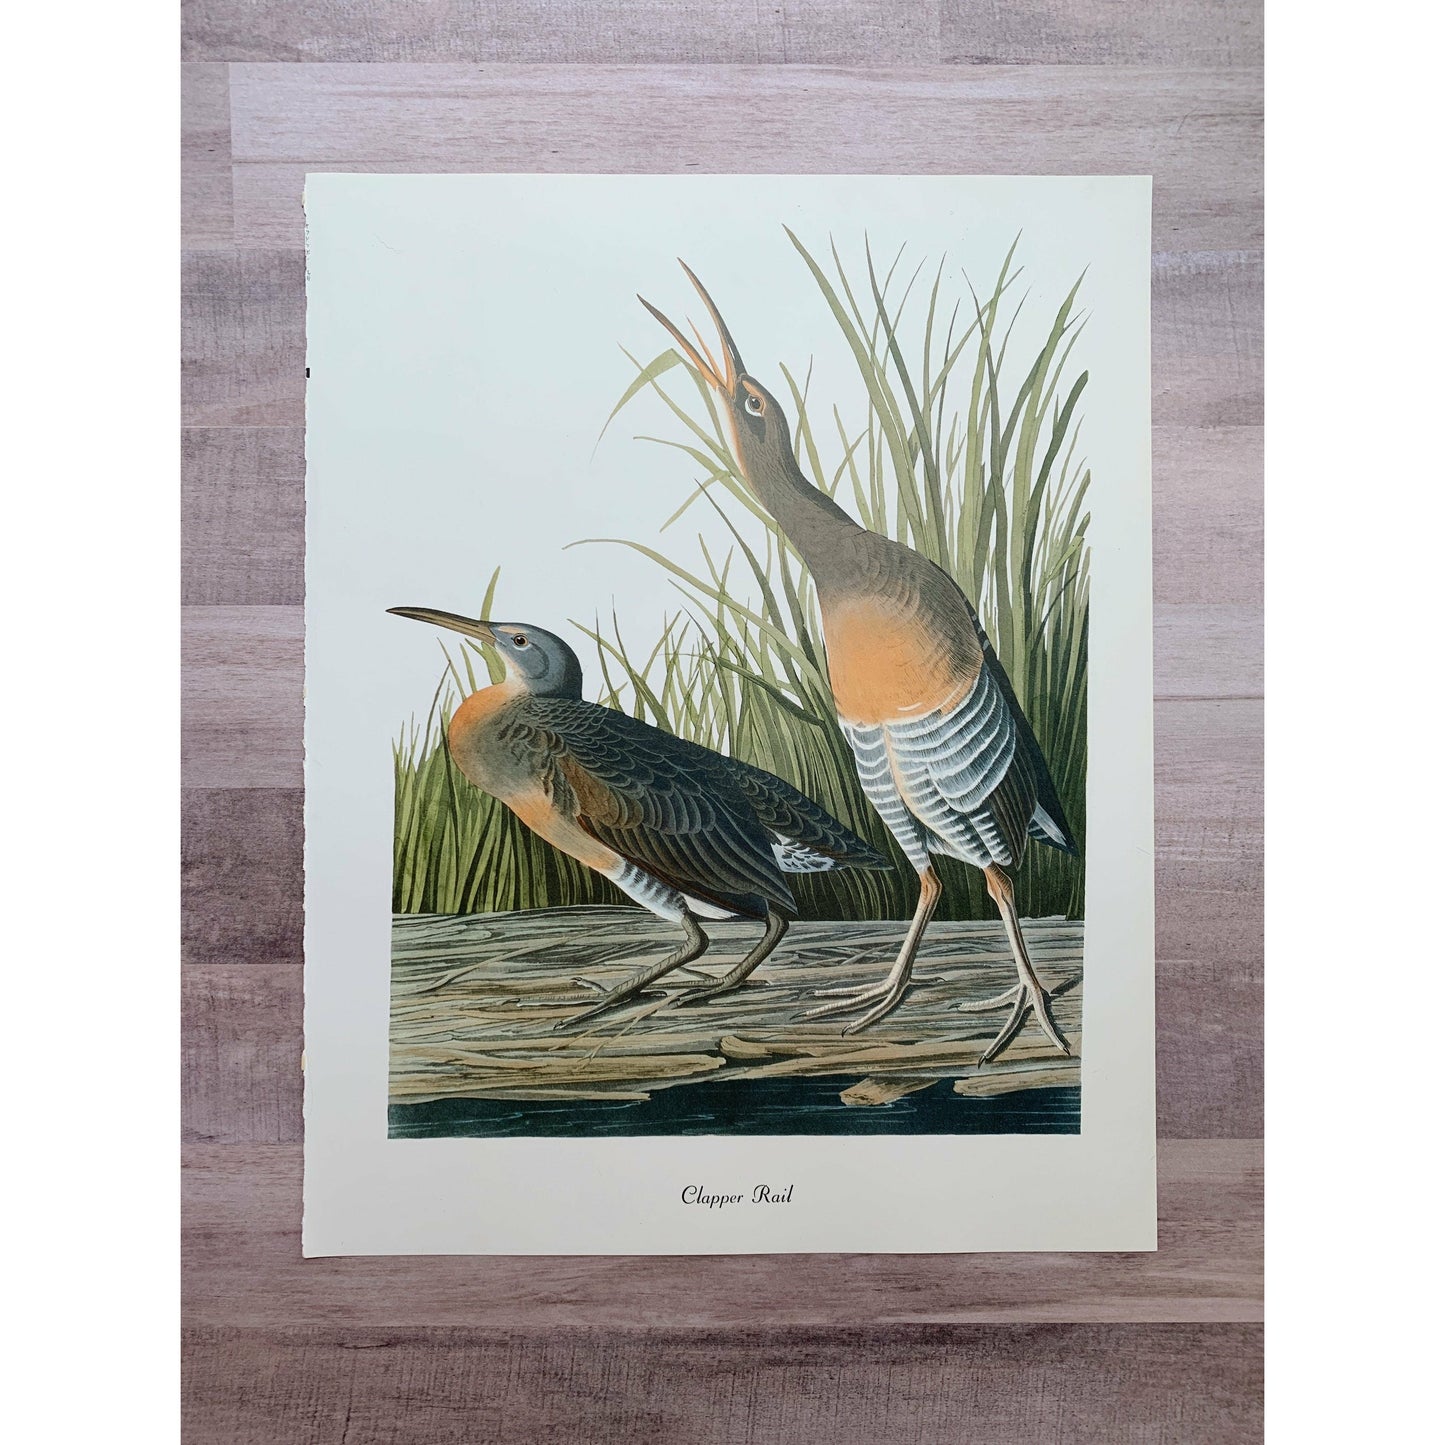 True Vintage Audubon Birds Prints, Authentic Old Book Plates for Framing, Bird Art Set